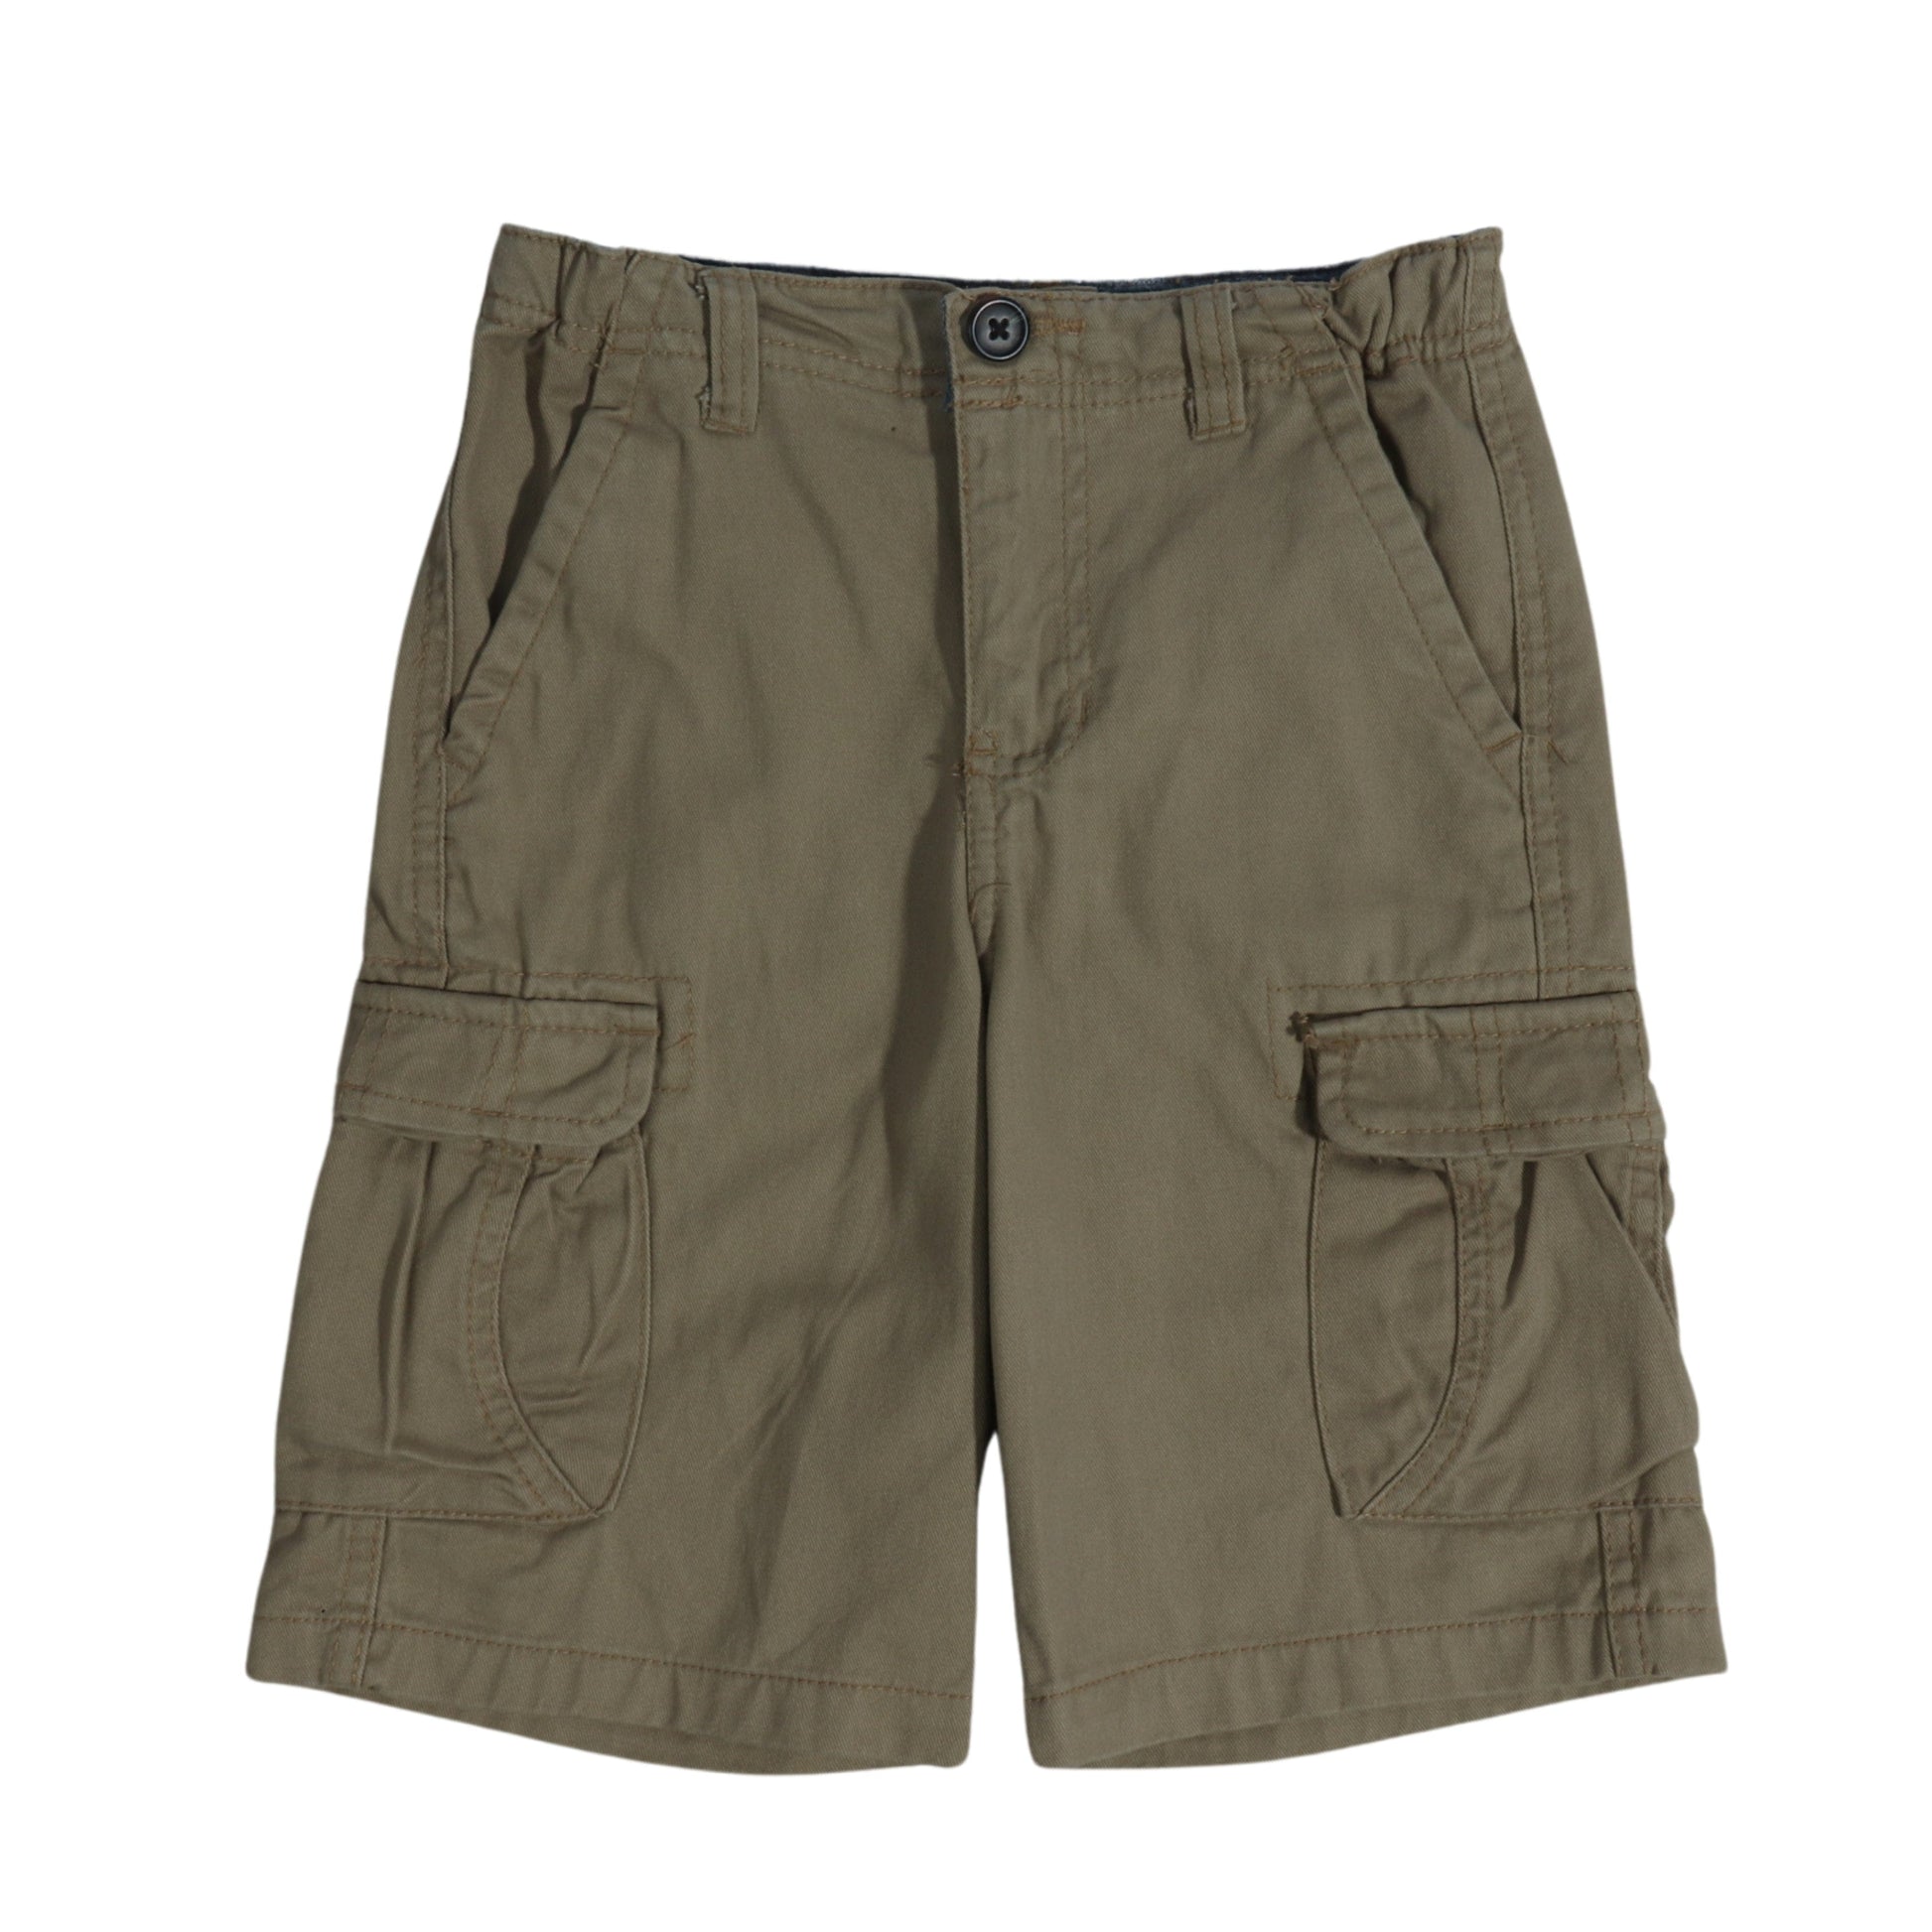 CHEROKEE Boys Bottoms 5 Years / Dark Beige CHEROKEE - Side Pockets Shorts